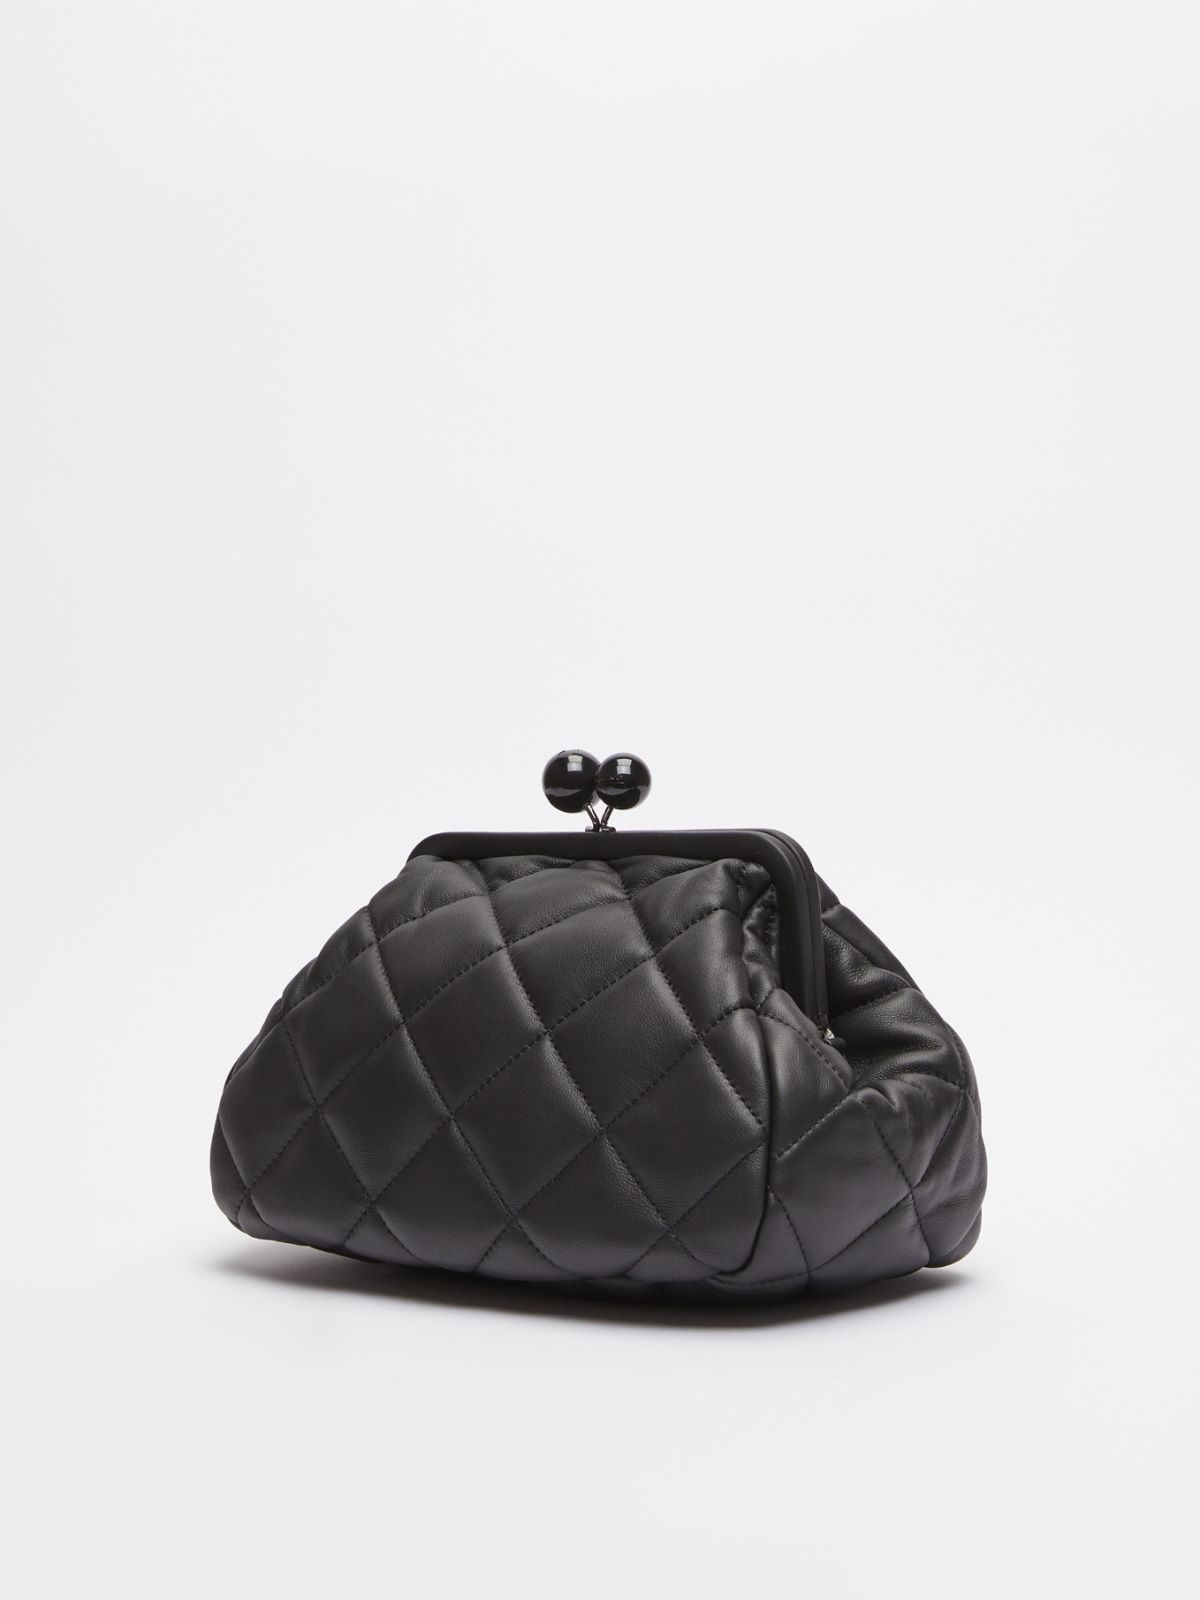 Nappa leather Pasticcino Bag - BLACK - Weekend Max Mara - 2